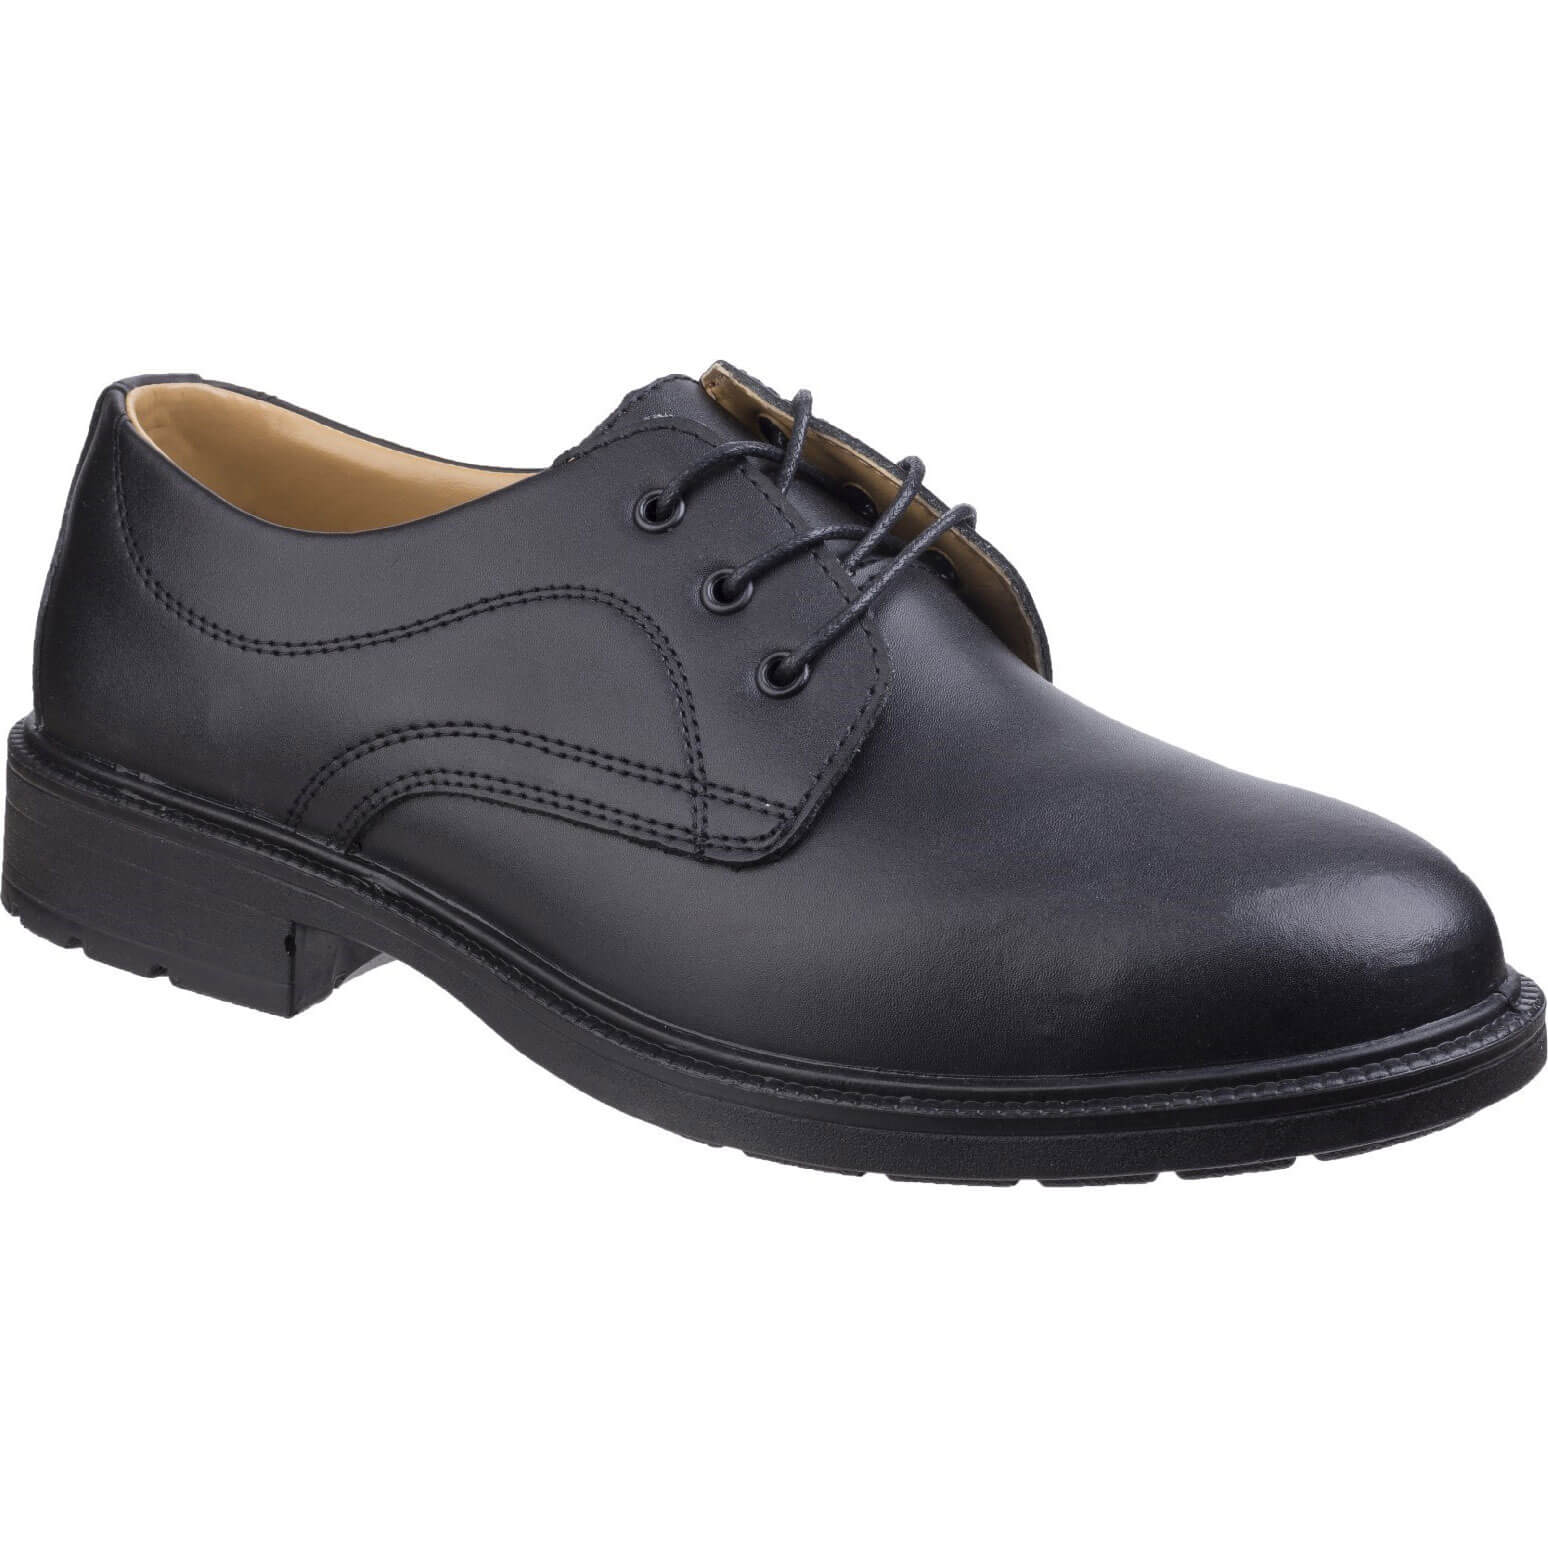 Image of Amblers Safety FS45 Safety Shoe Black Size 14